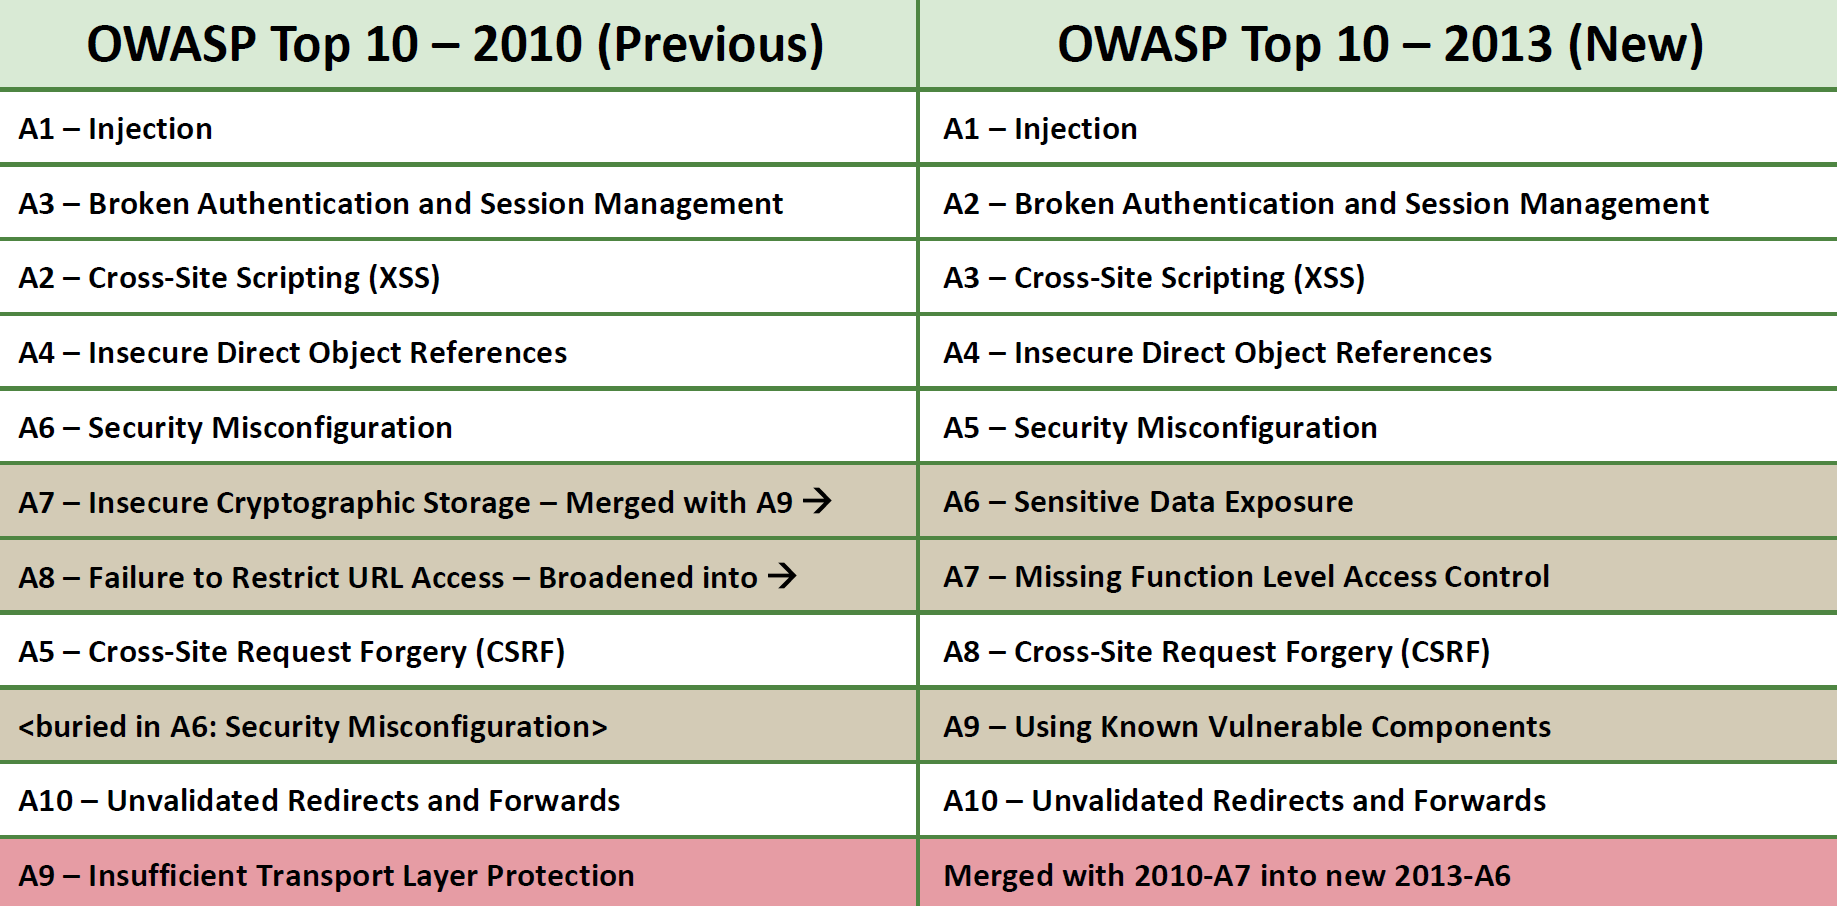 OWASP Top 10, Version 2013